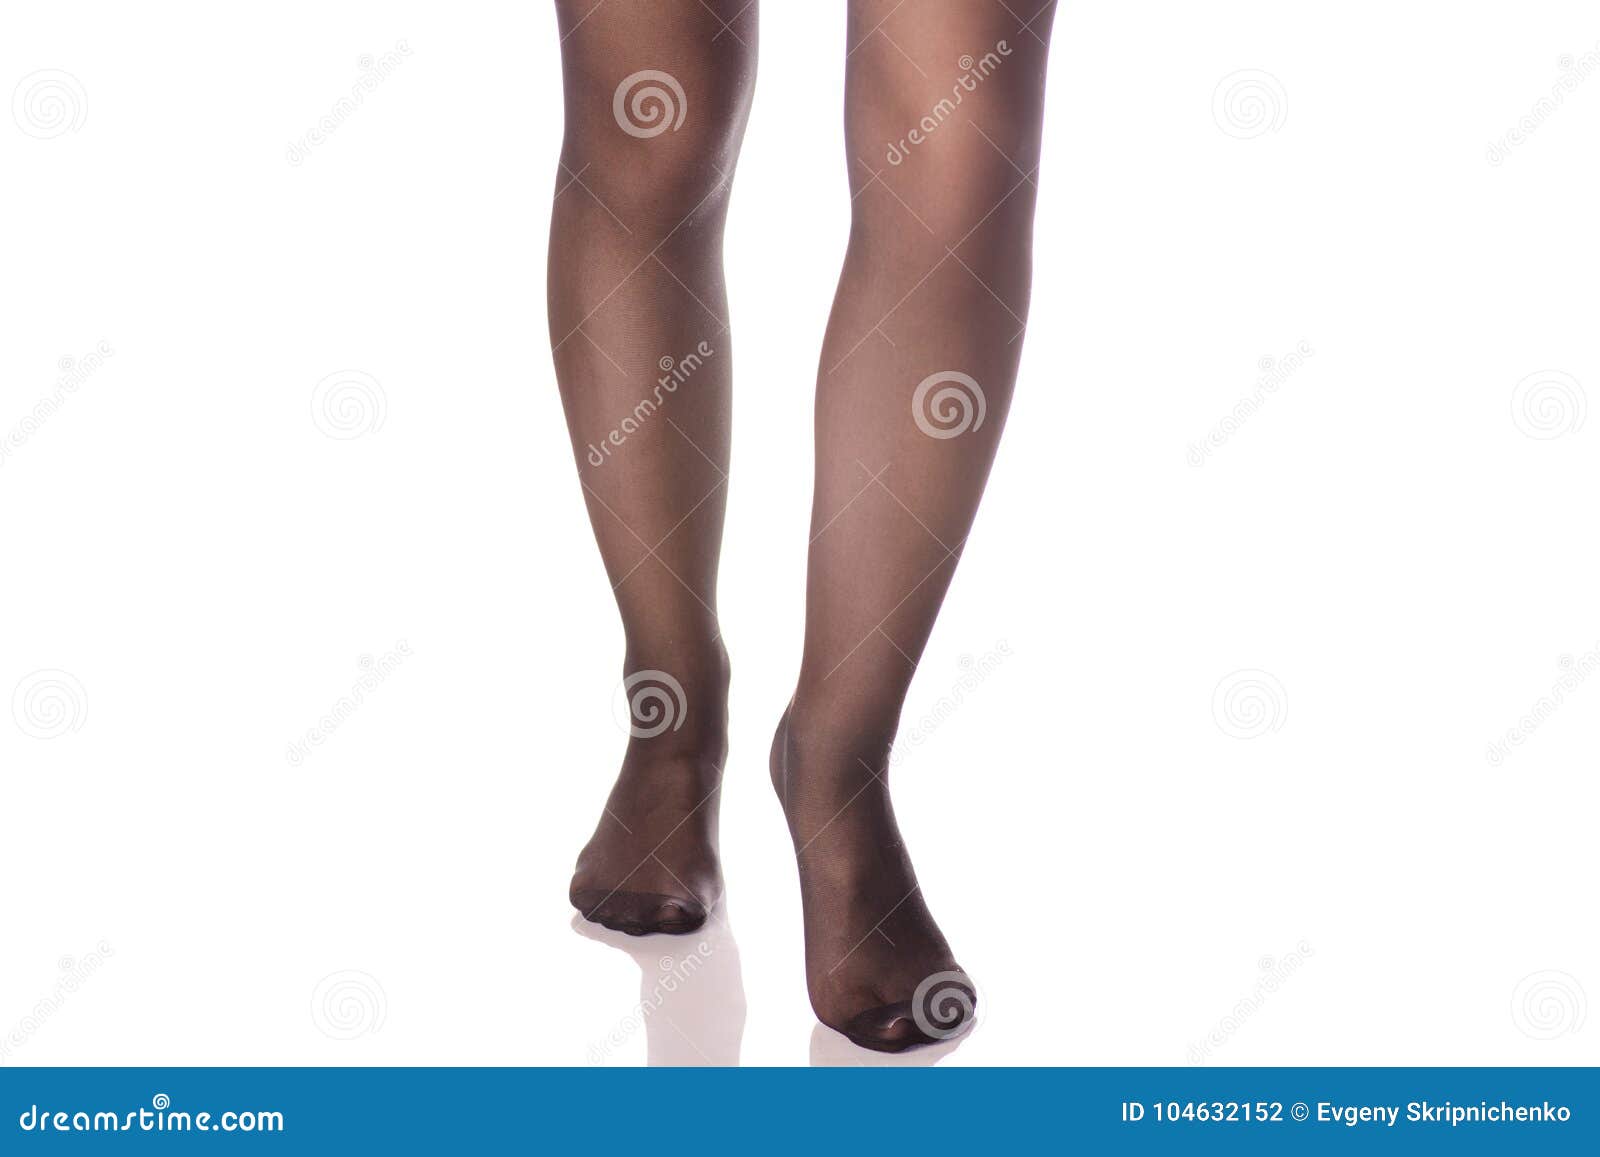 Female Legs Black Stockings Tights Stock Photo - Image of beautiful ...